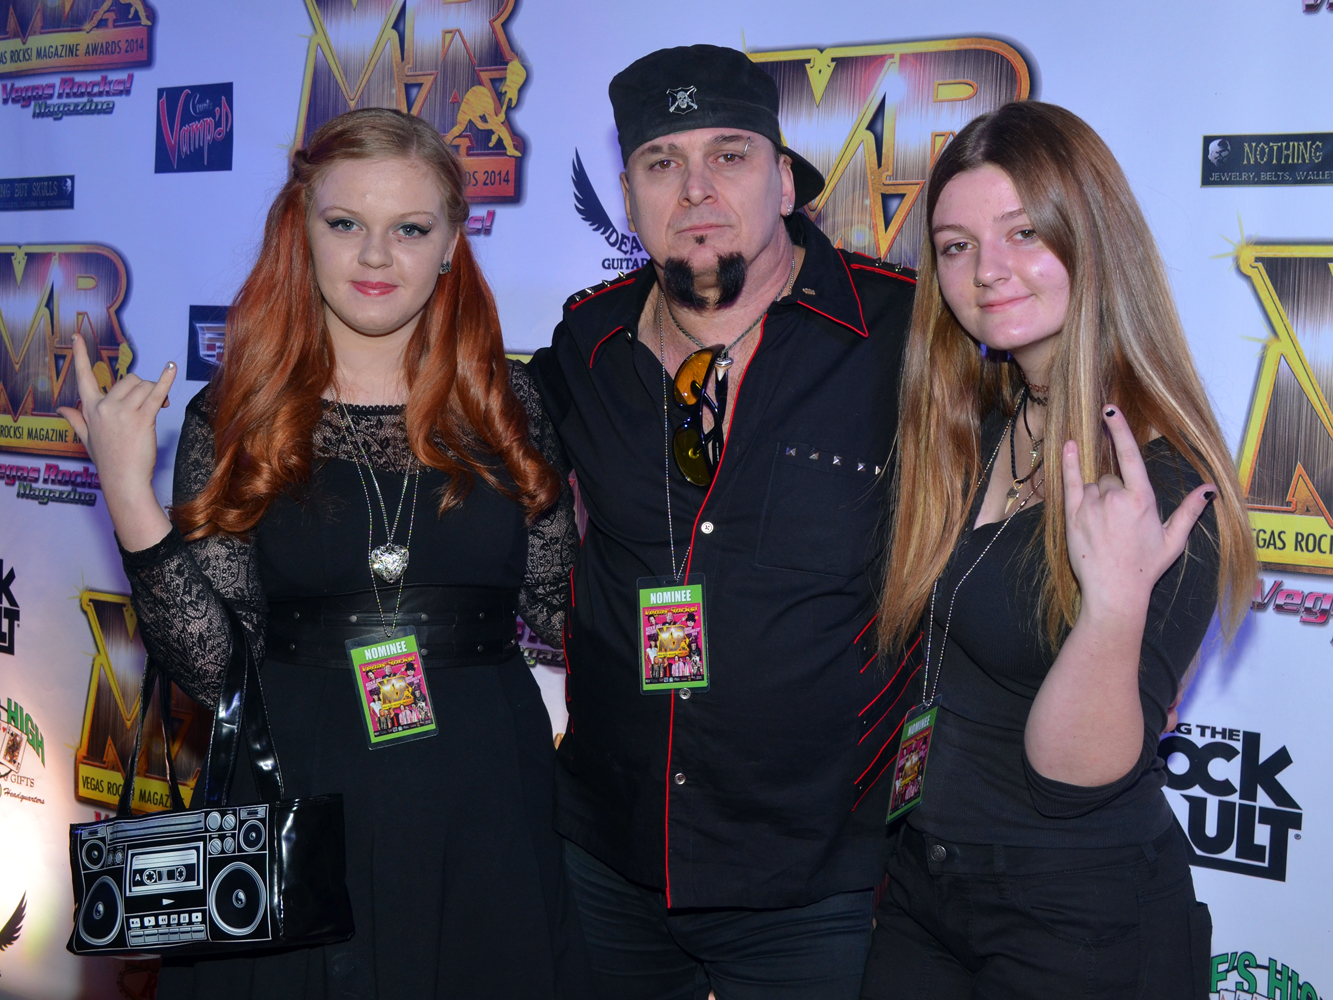 Stereo Love - Vegas Rocks Magazine Music Awards 2014 photo credit Stephen Thorburn 63596